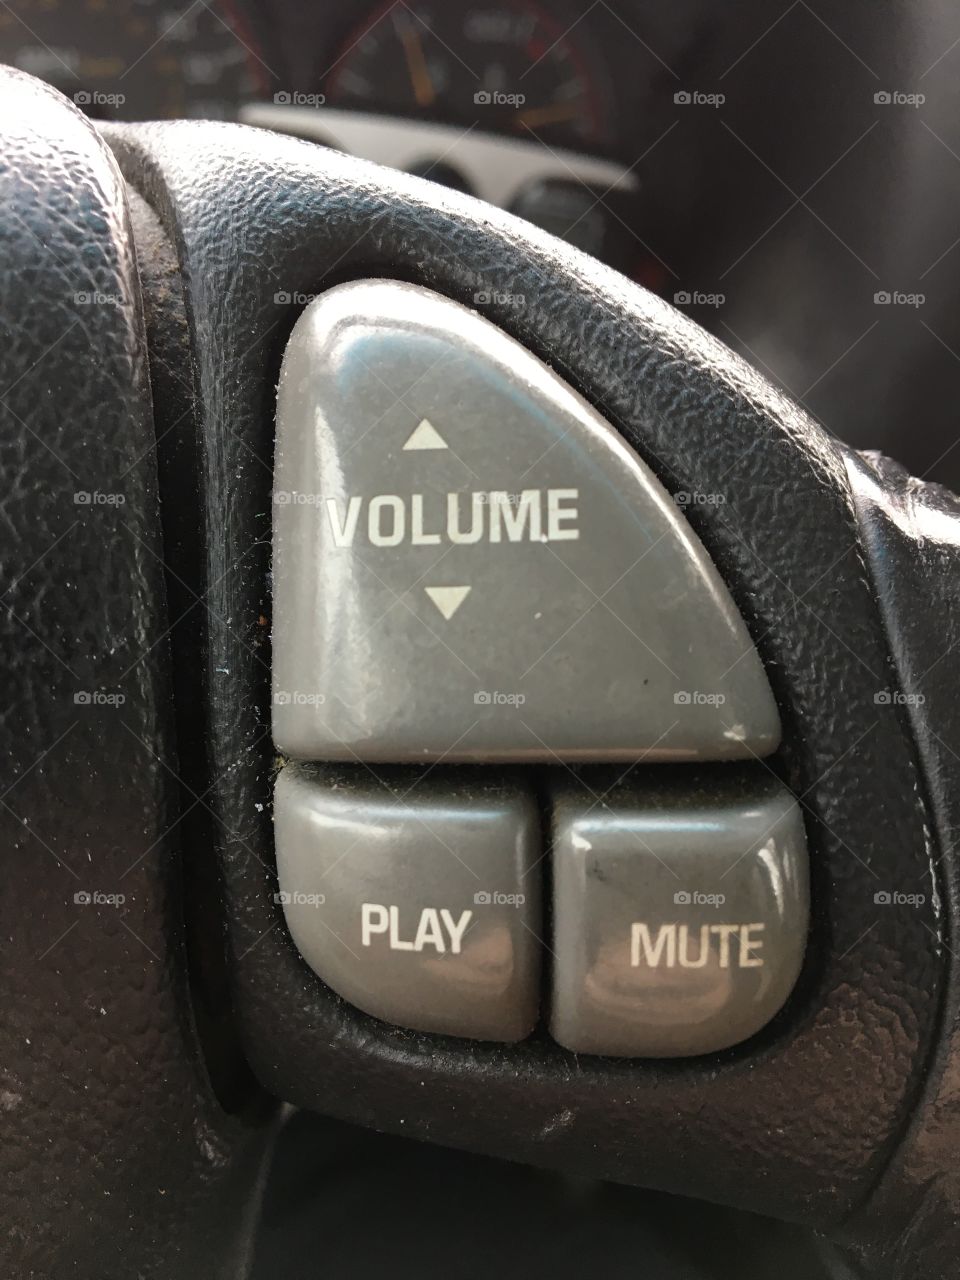 Pump up the volume